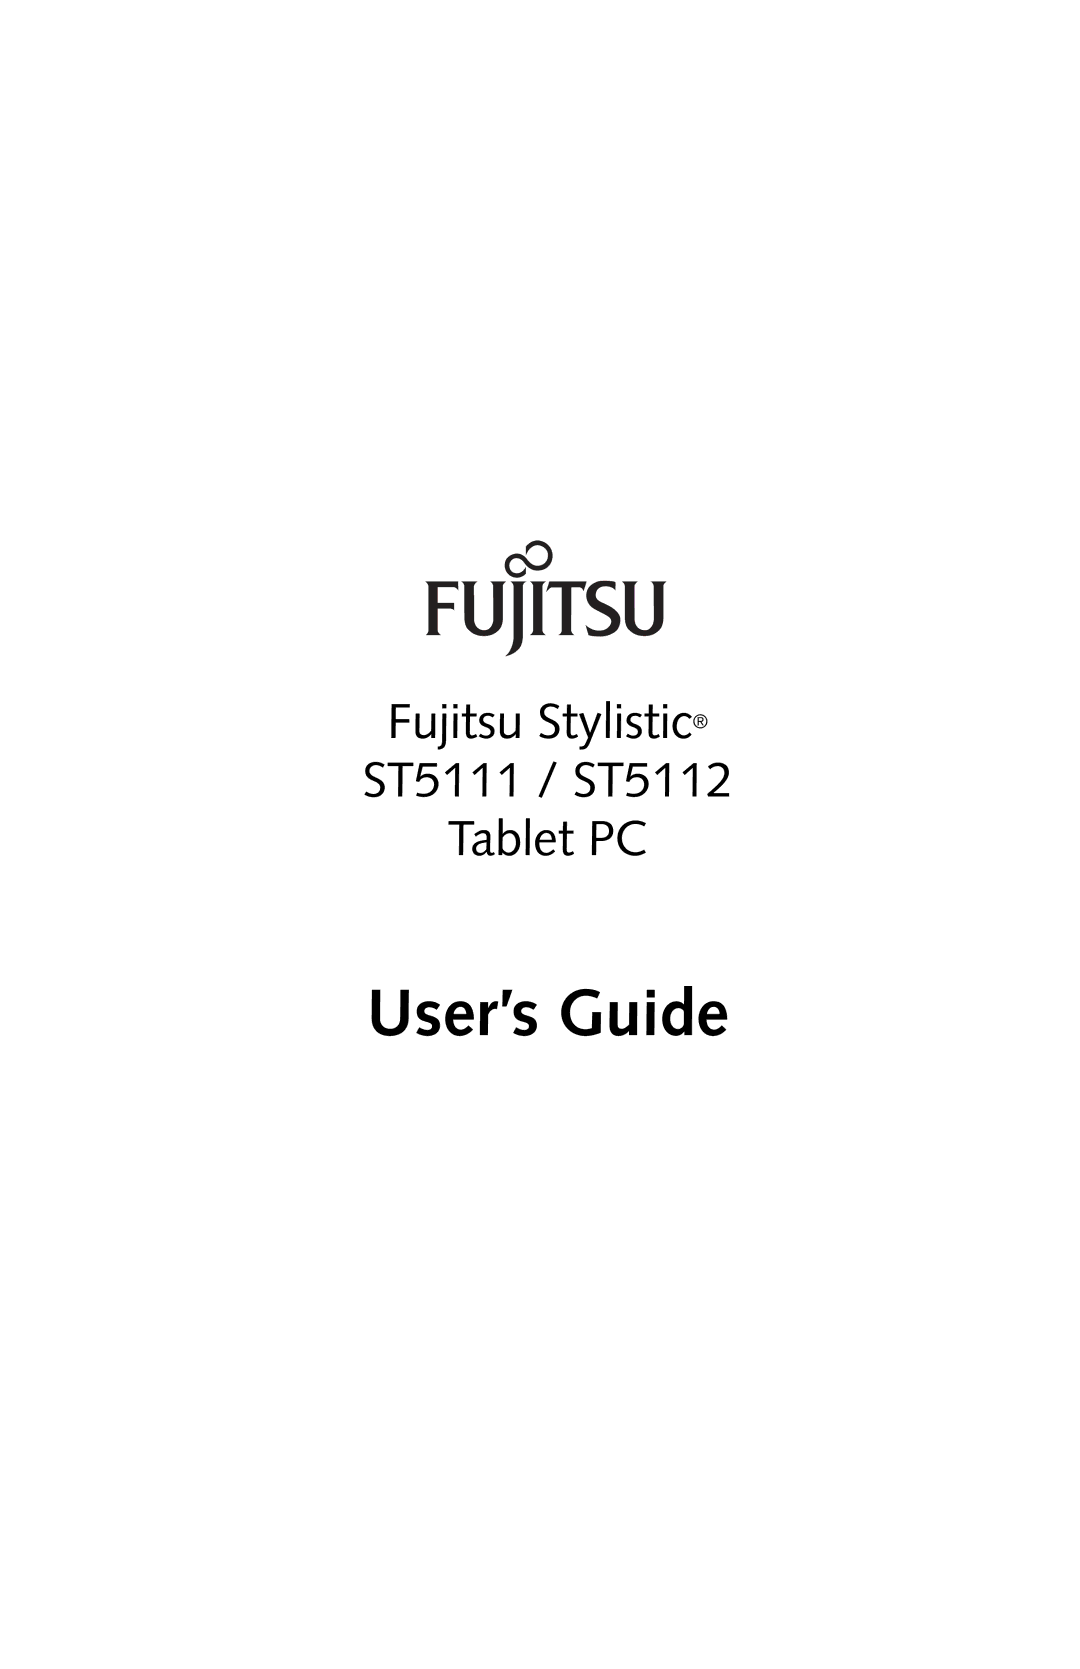 Fujitsu ST5111, ST5112 manual User’s Guide 